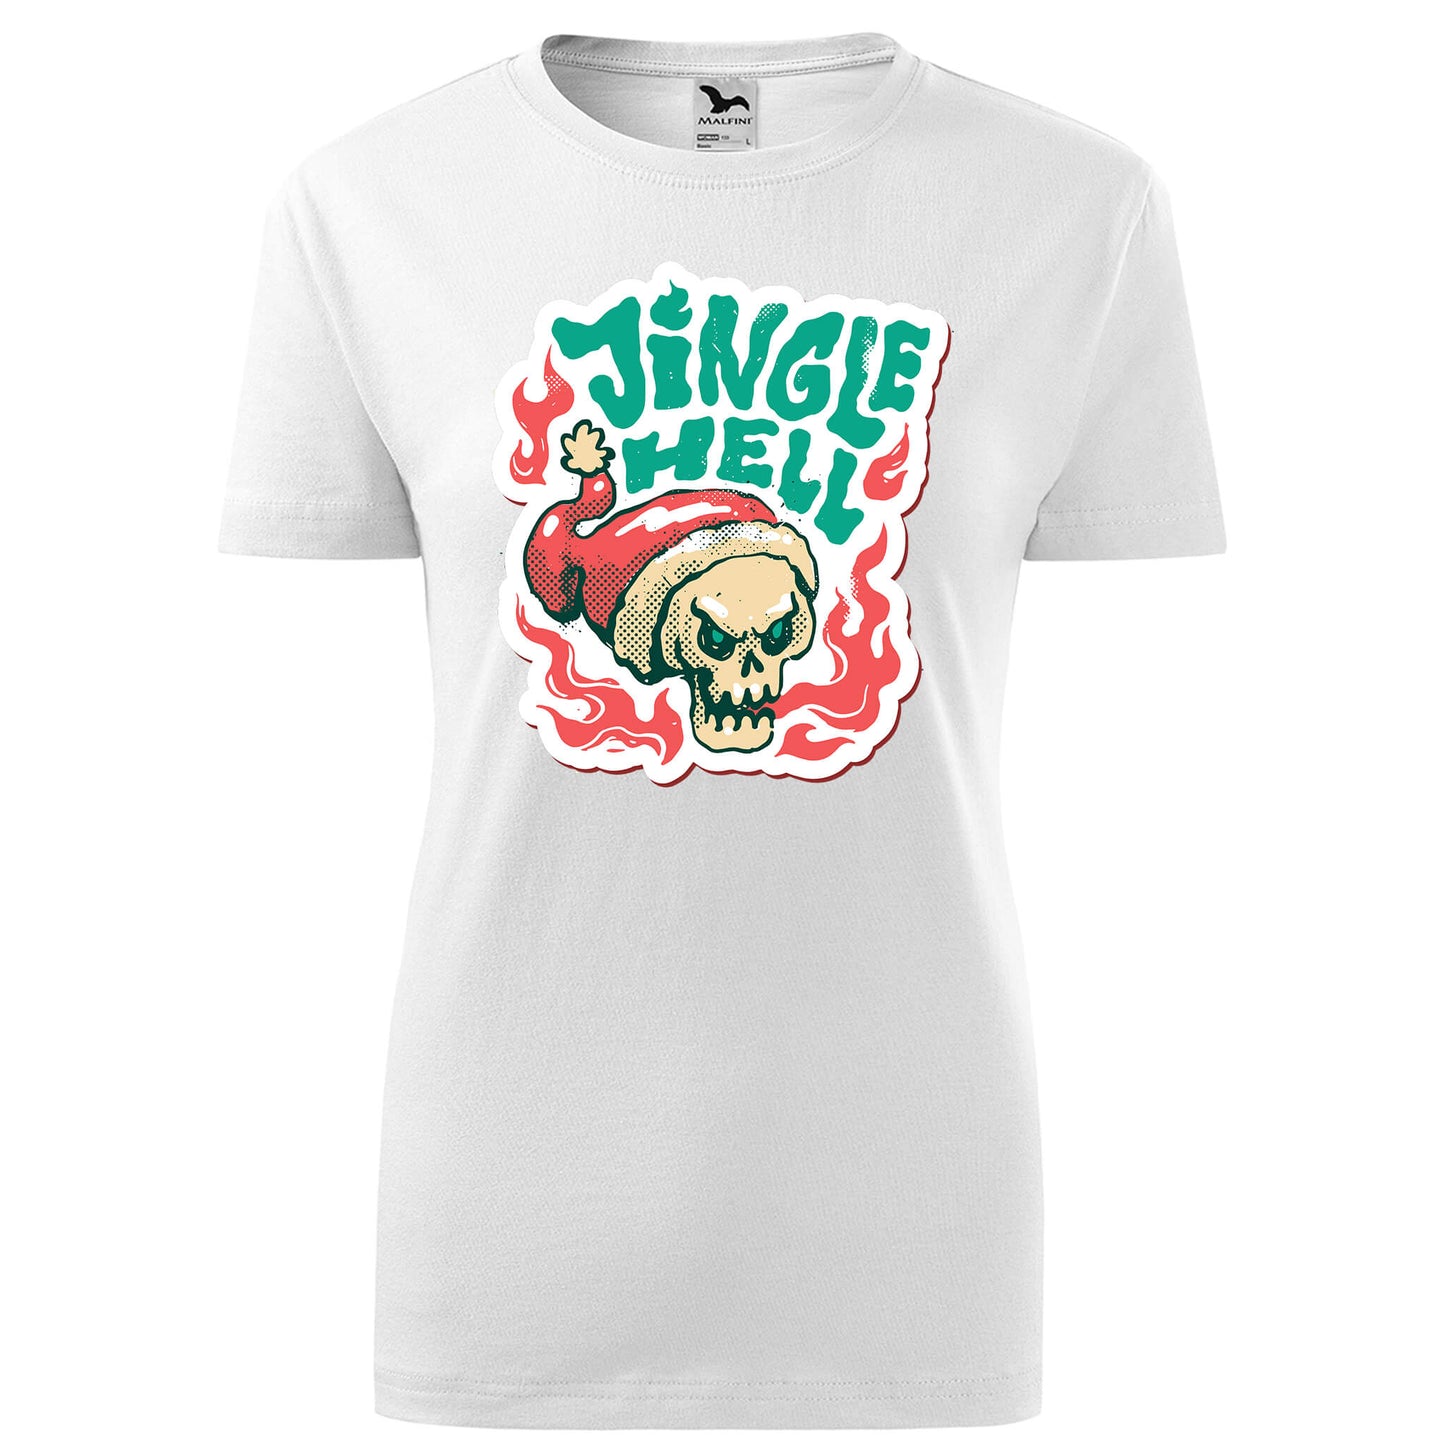 Jingle hell t-shirt - rvdesignprint